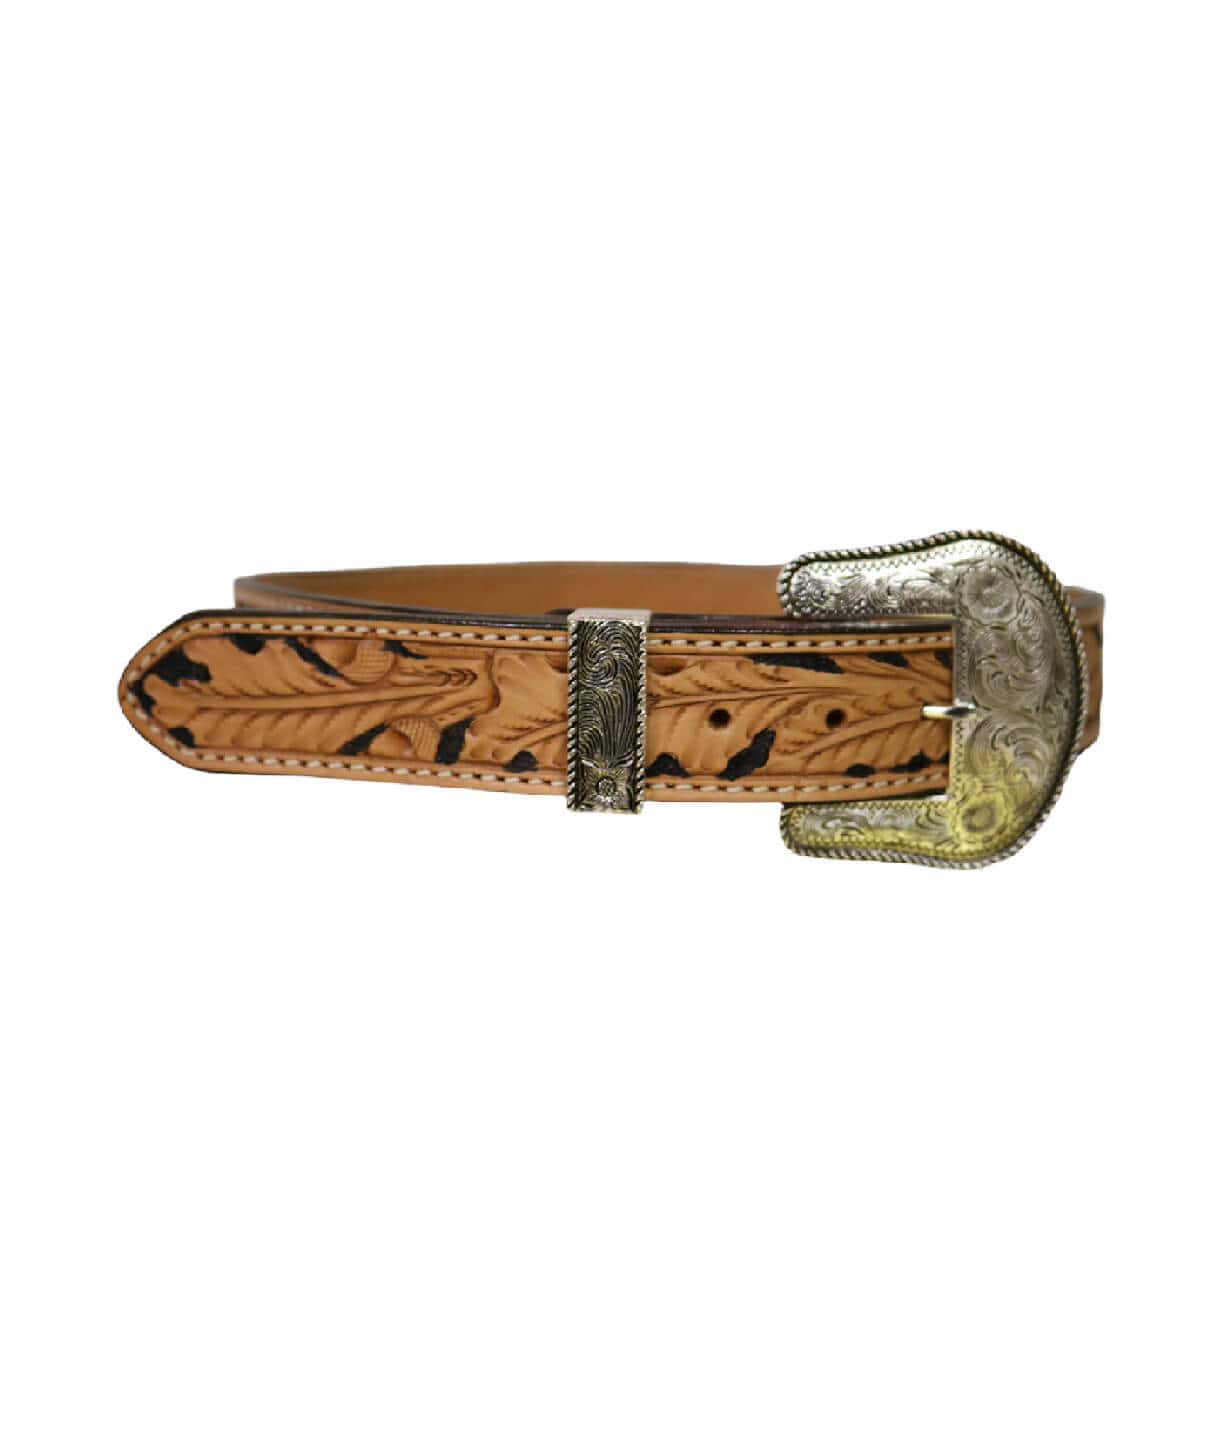 Alamo Saddlery Belts 1.5" straight belt golden leather acorn tooling with background paint